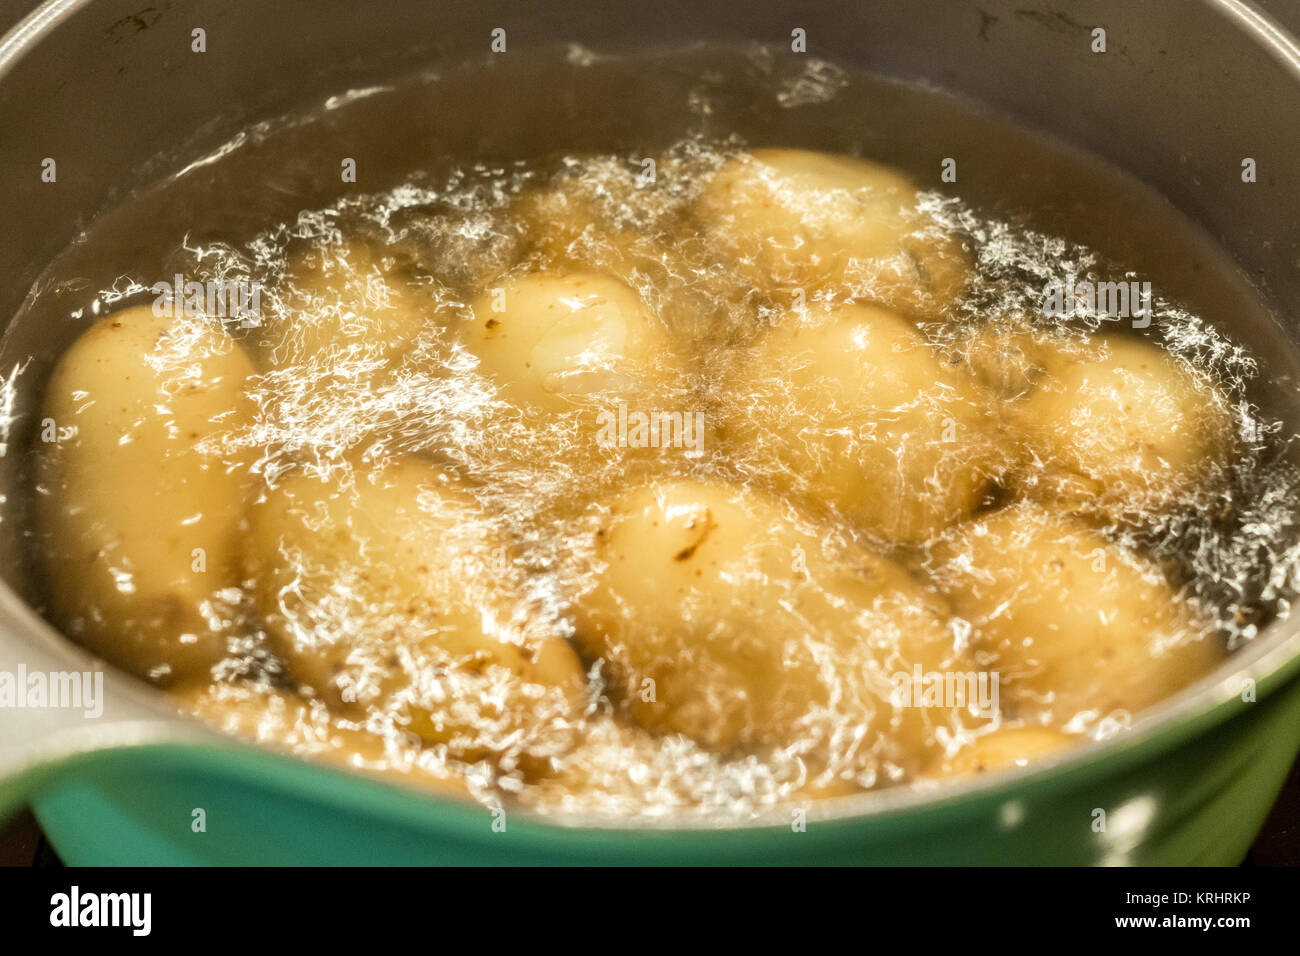 Baby Kartoffeln kochen in ein eintopfgericht Pot, Nahaufnahme. Stockfoto